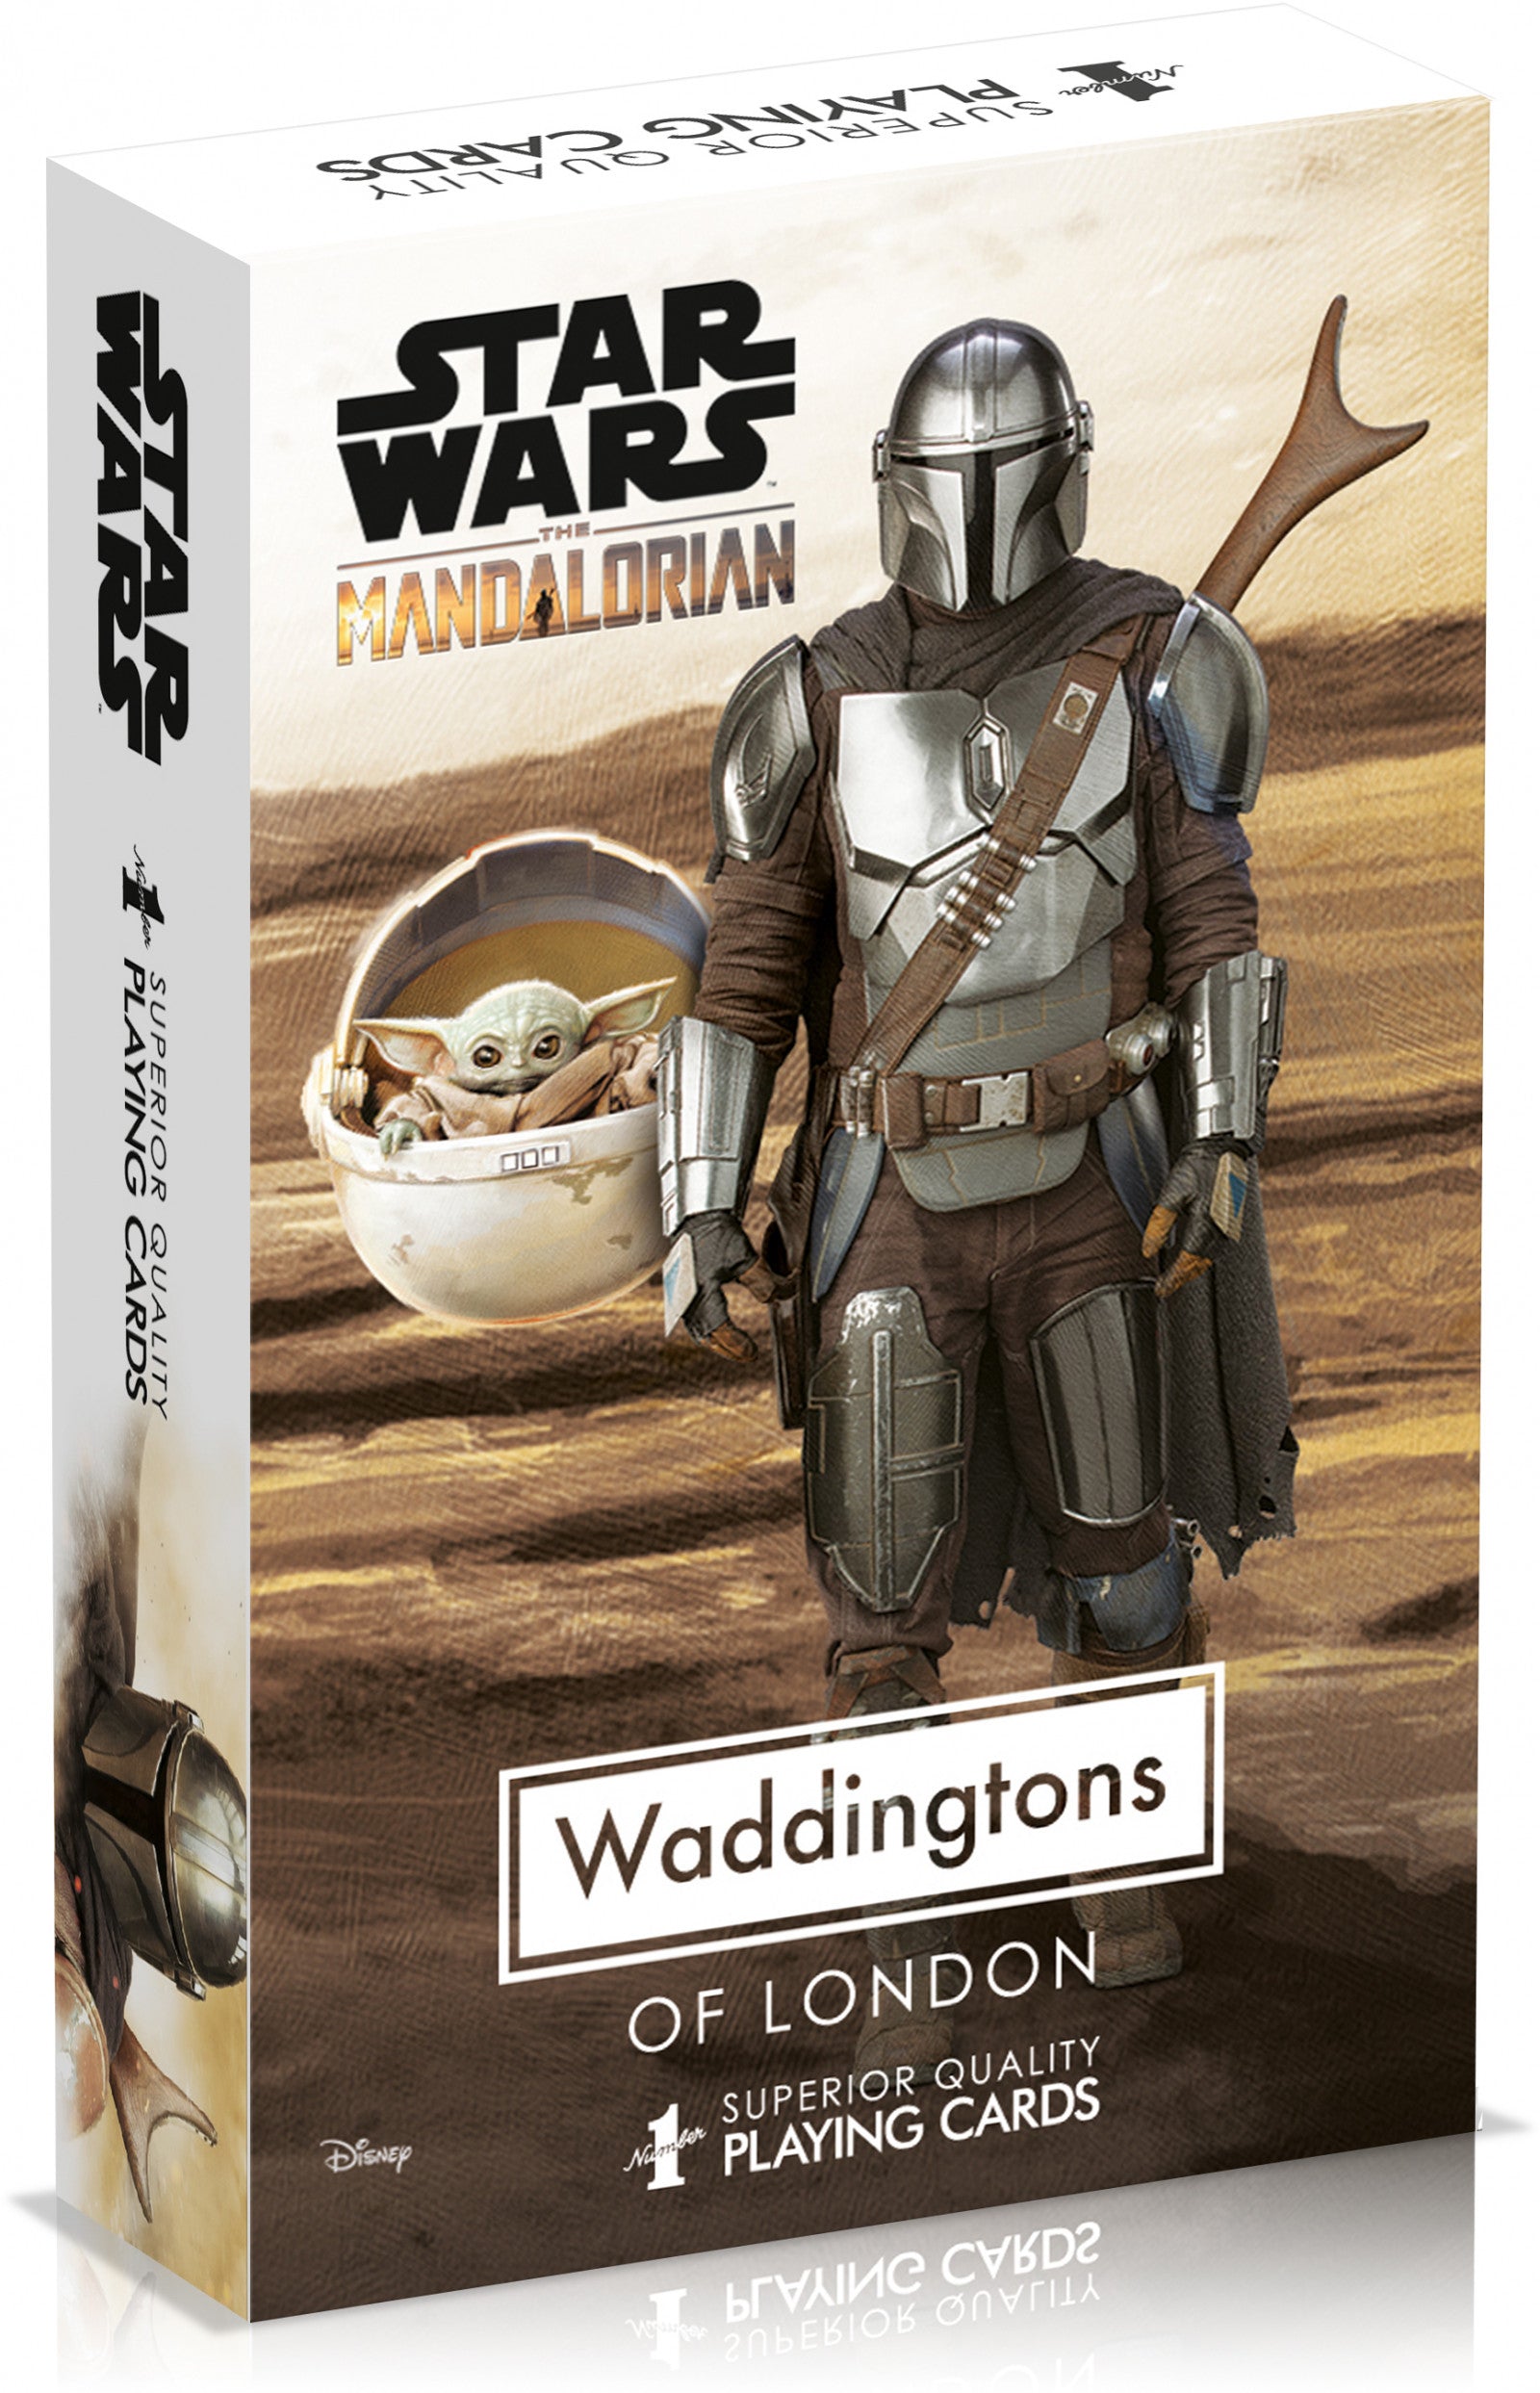 Wadddingtons Star Wars The Mandalorian Playing Cards